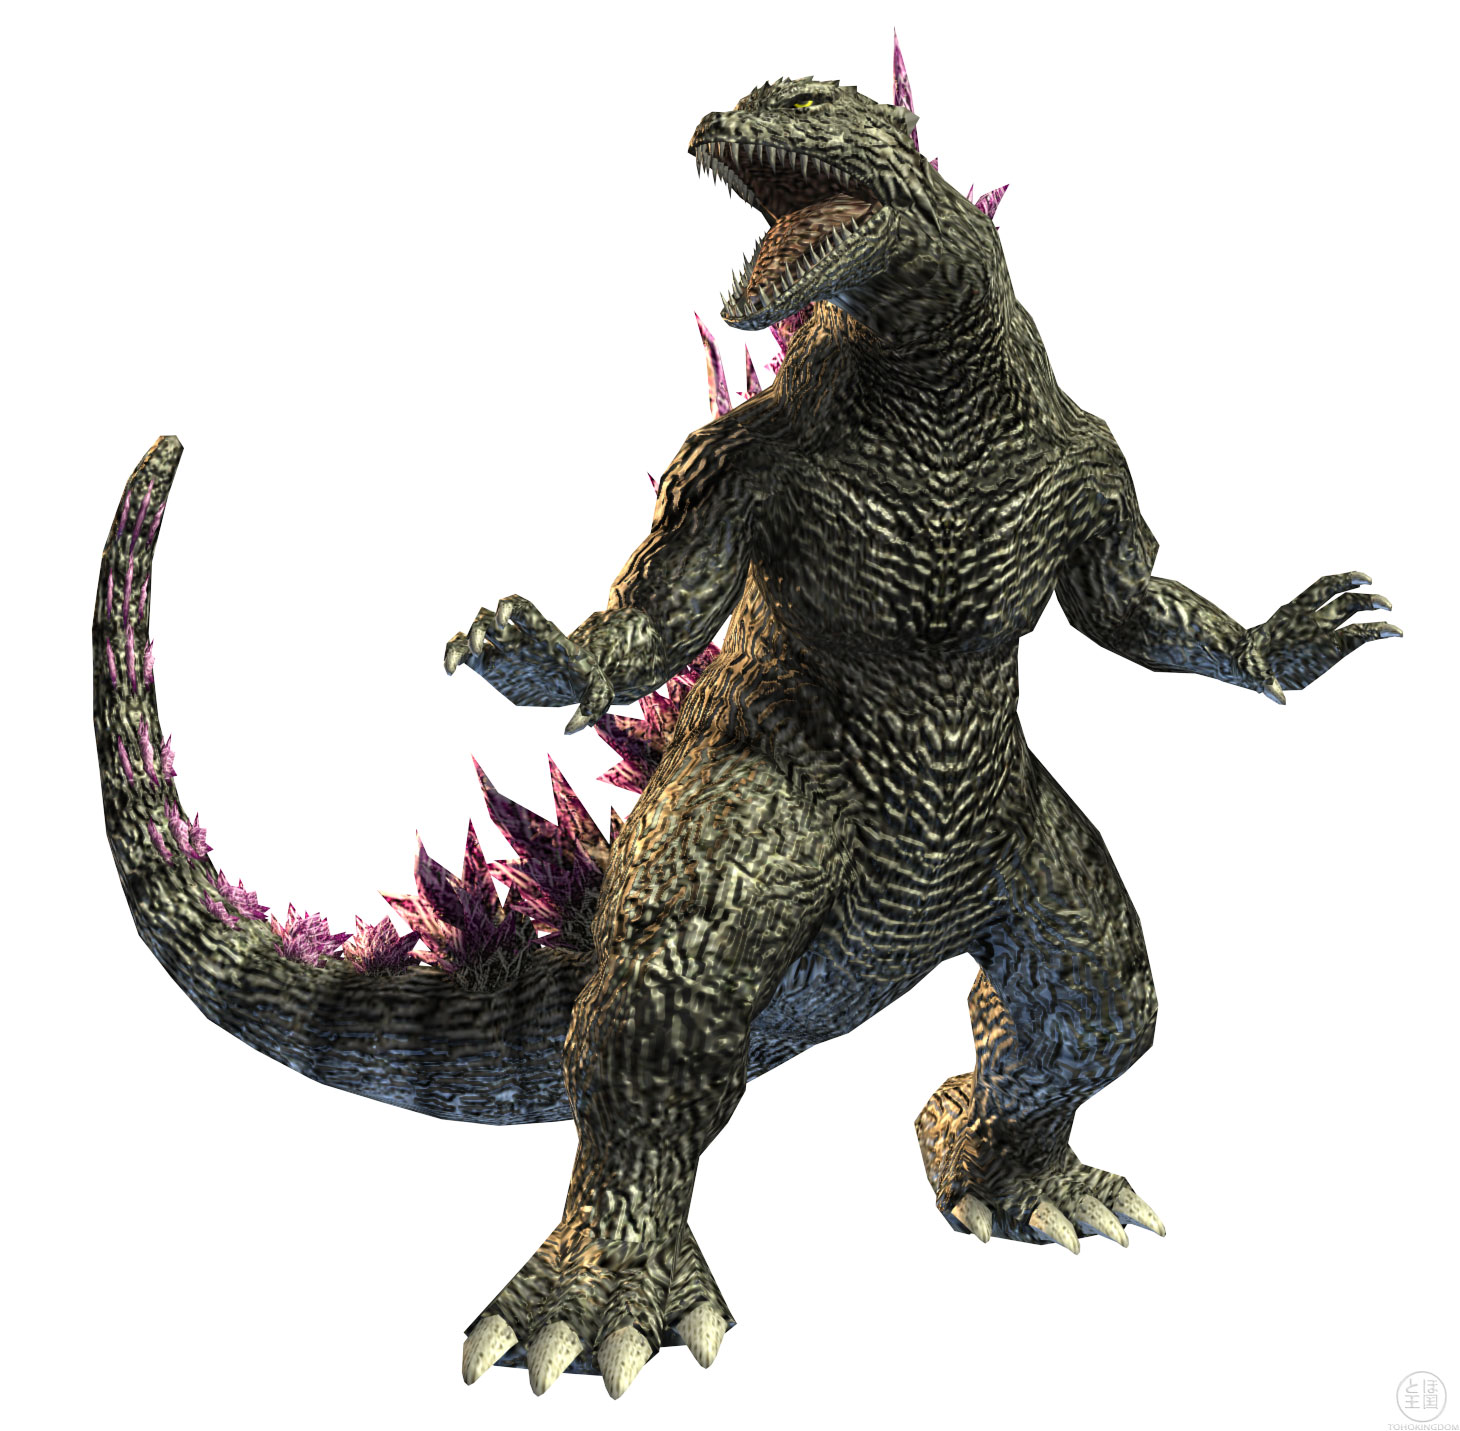 Godzilla: Unleashed Backgrounds, Compatible - PC, Mobile, Gadgets| 1460x1431 px